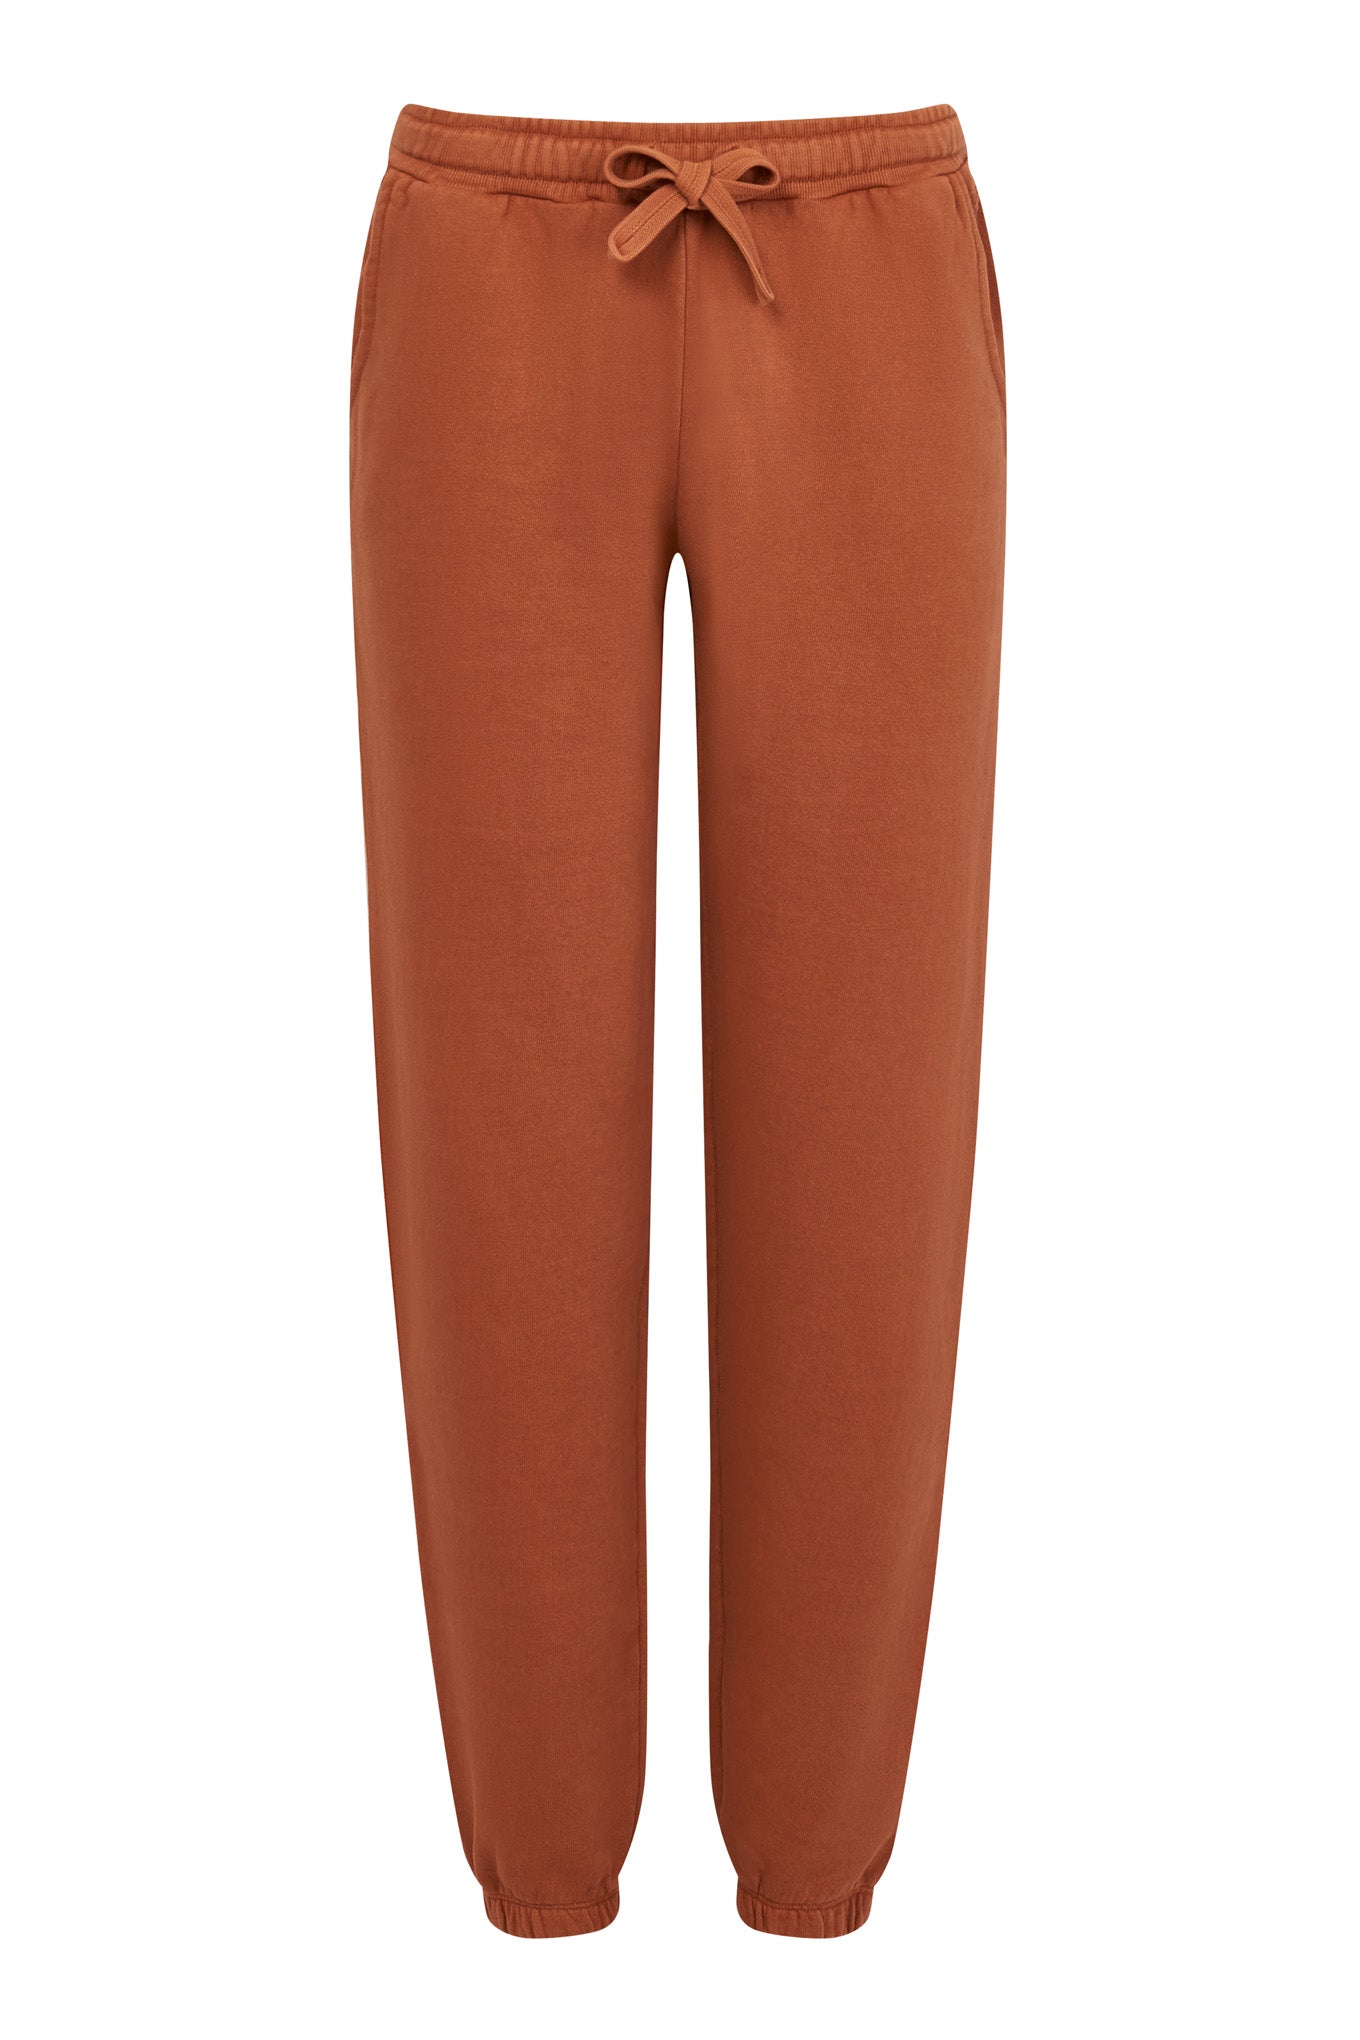 Pantalon de jogging EVIE orange foncé en coton biologique de Komodo